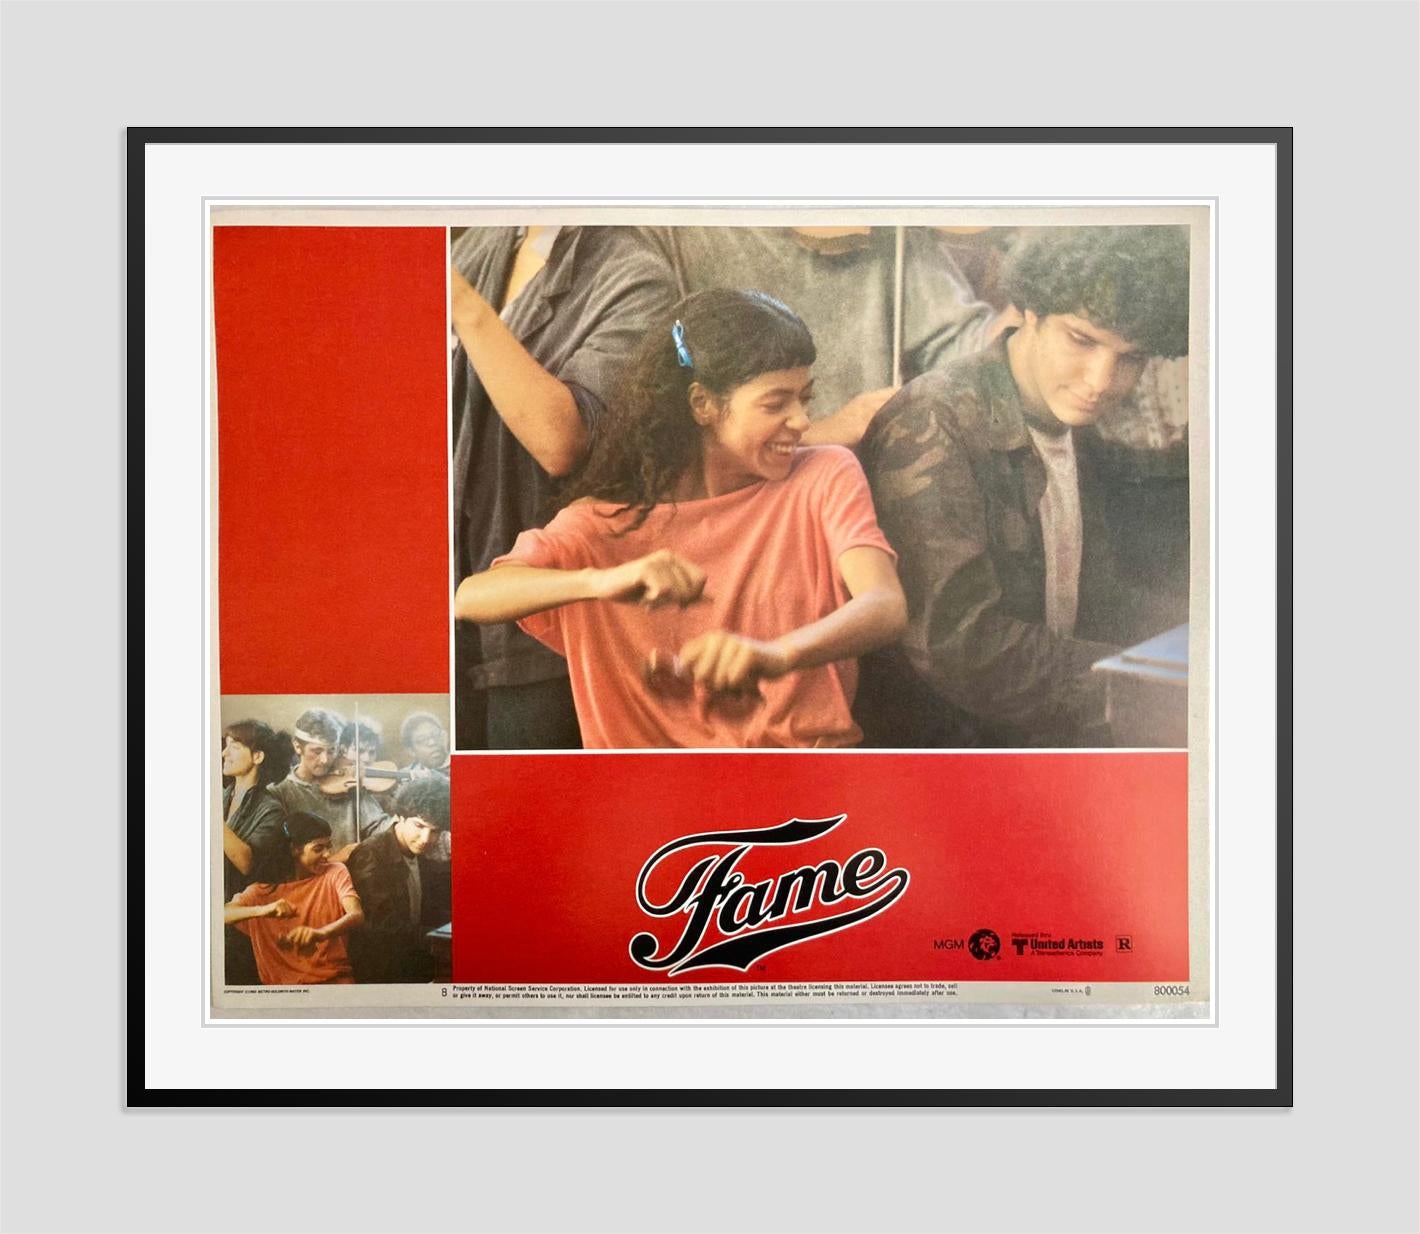 Fame - Original Vintage 1980 Movie Film Cinema Lobby Card  - Print by Unknown